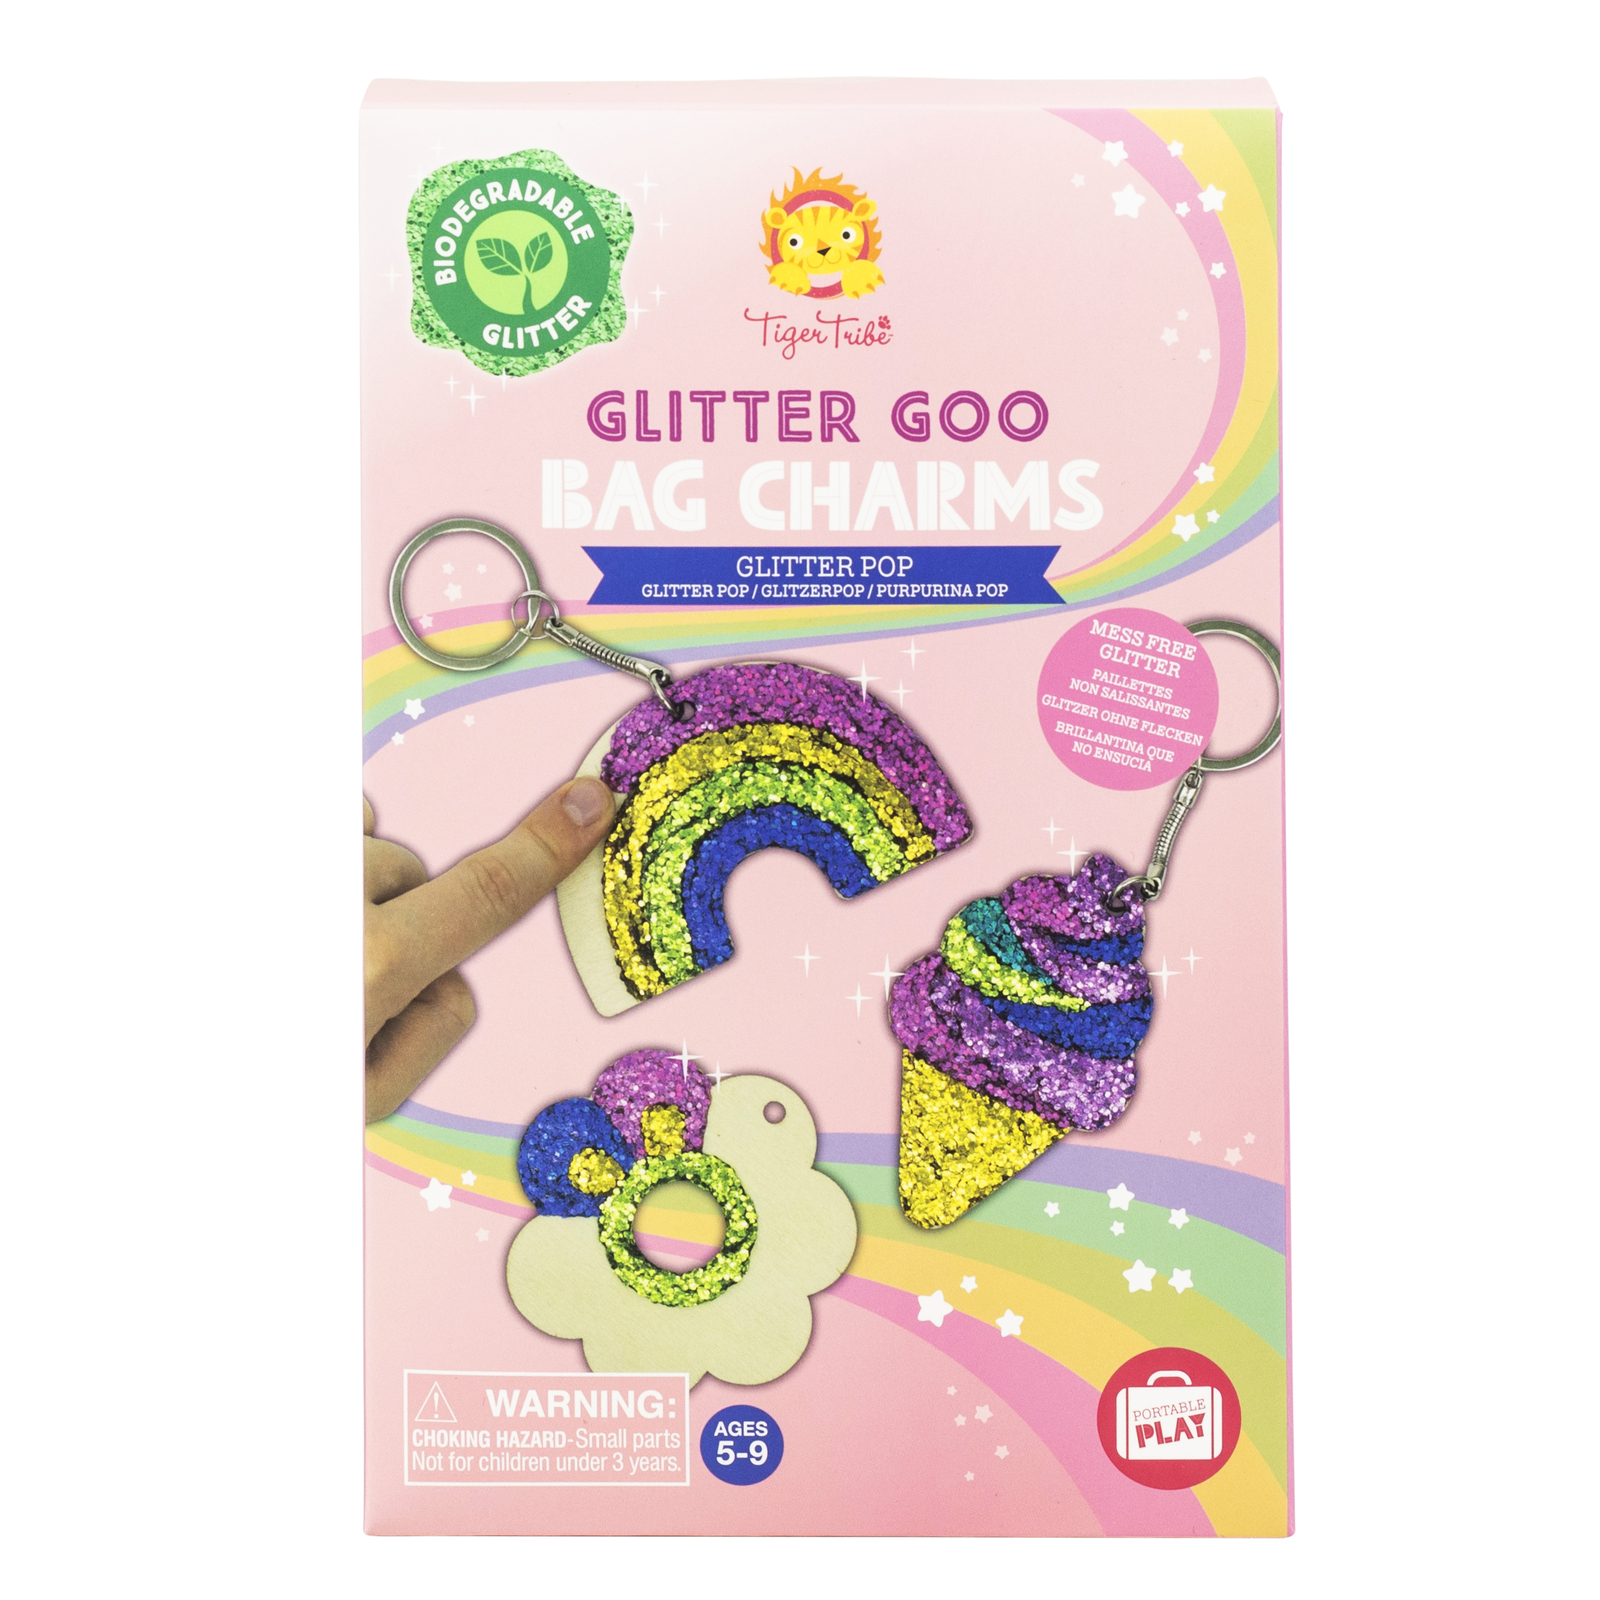 Tiger Tribe Glitter Goo Bag Charms | Glitter Pop